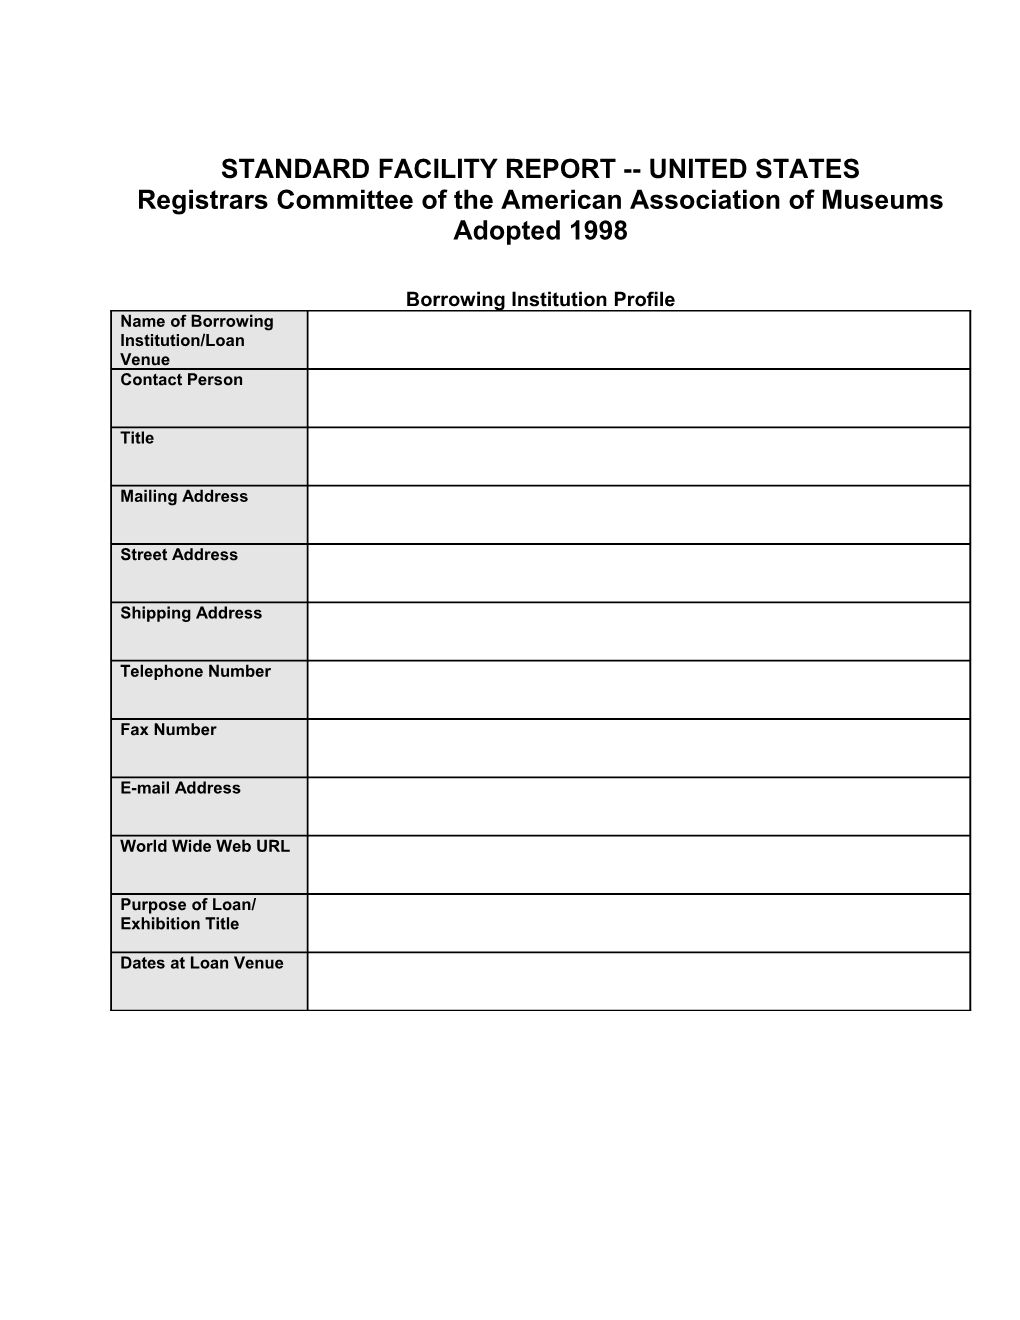 Standard Facility Report